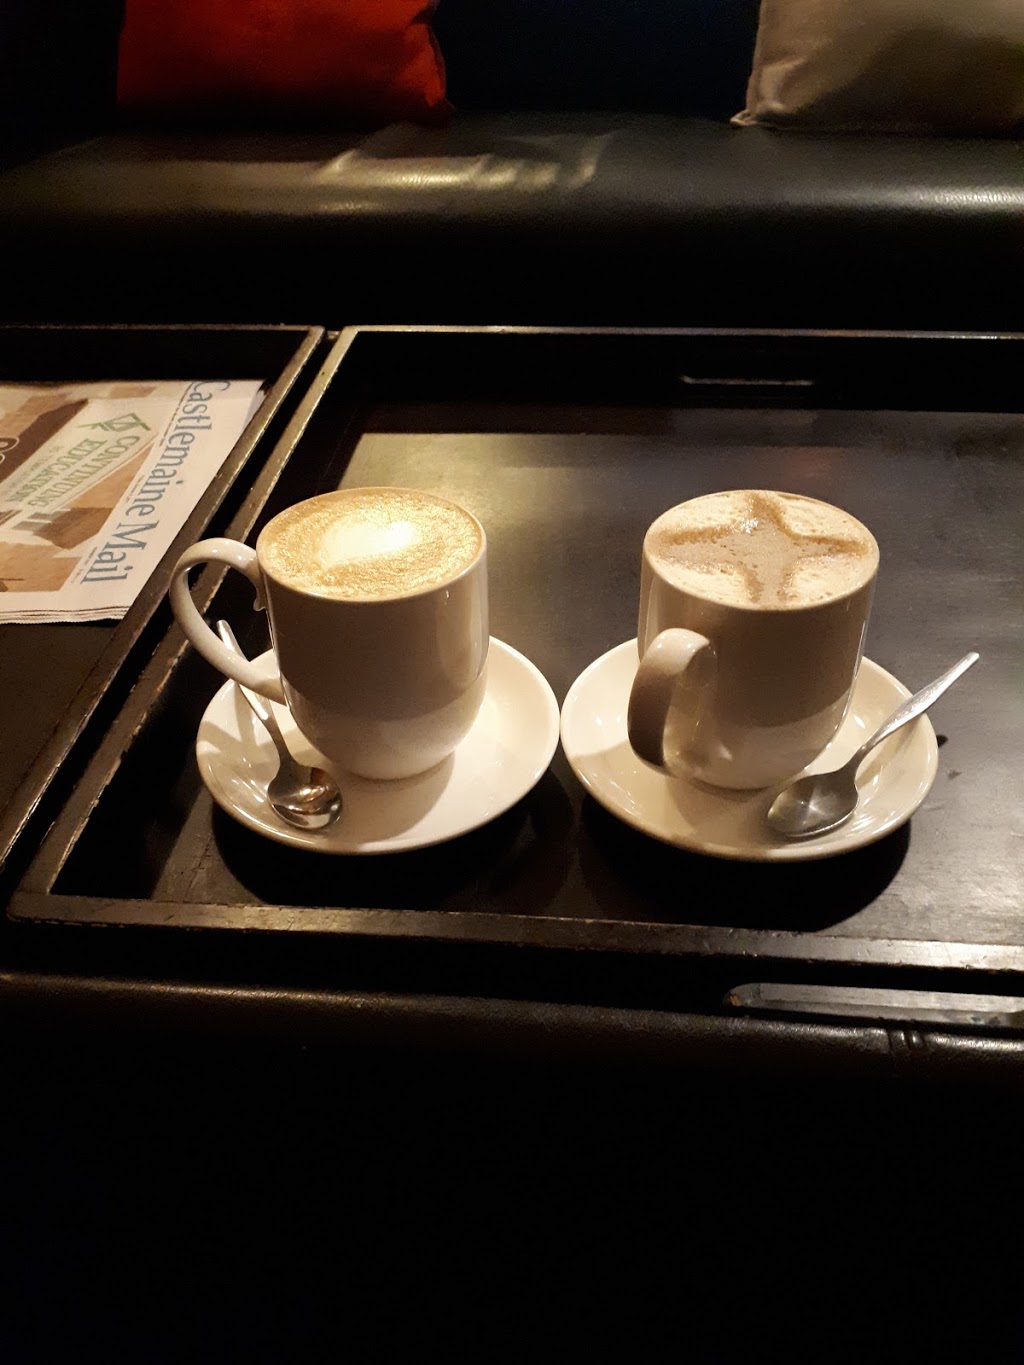 Pannini Espresso Cafe | cafe | 71 Mostyn St, Castlemaine VIC 3450, Australia | 0354721274 OR +61 3 5472 1274